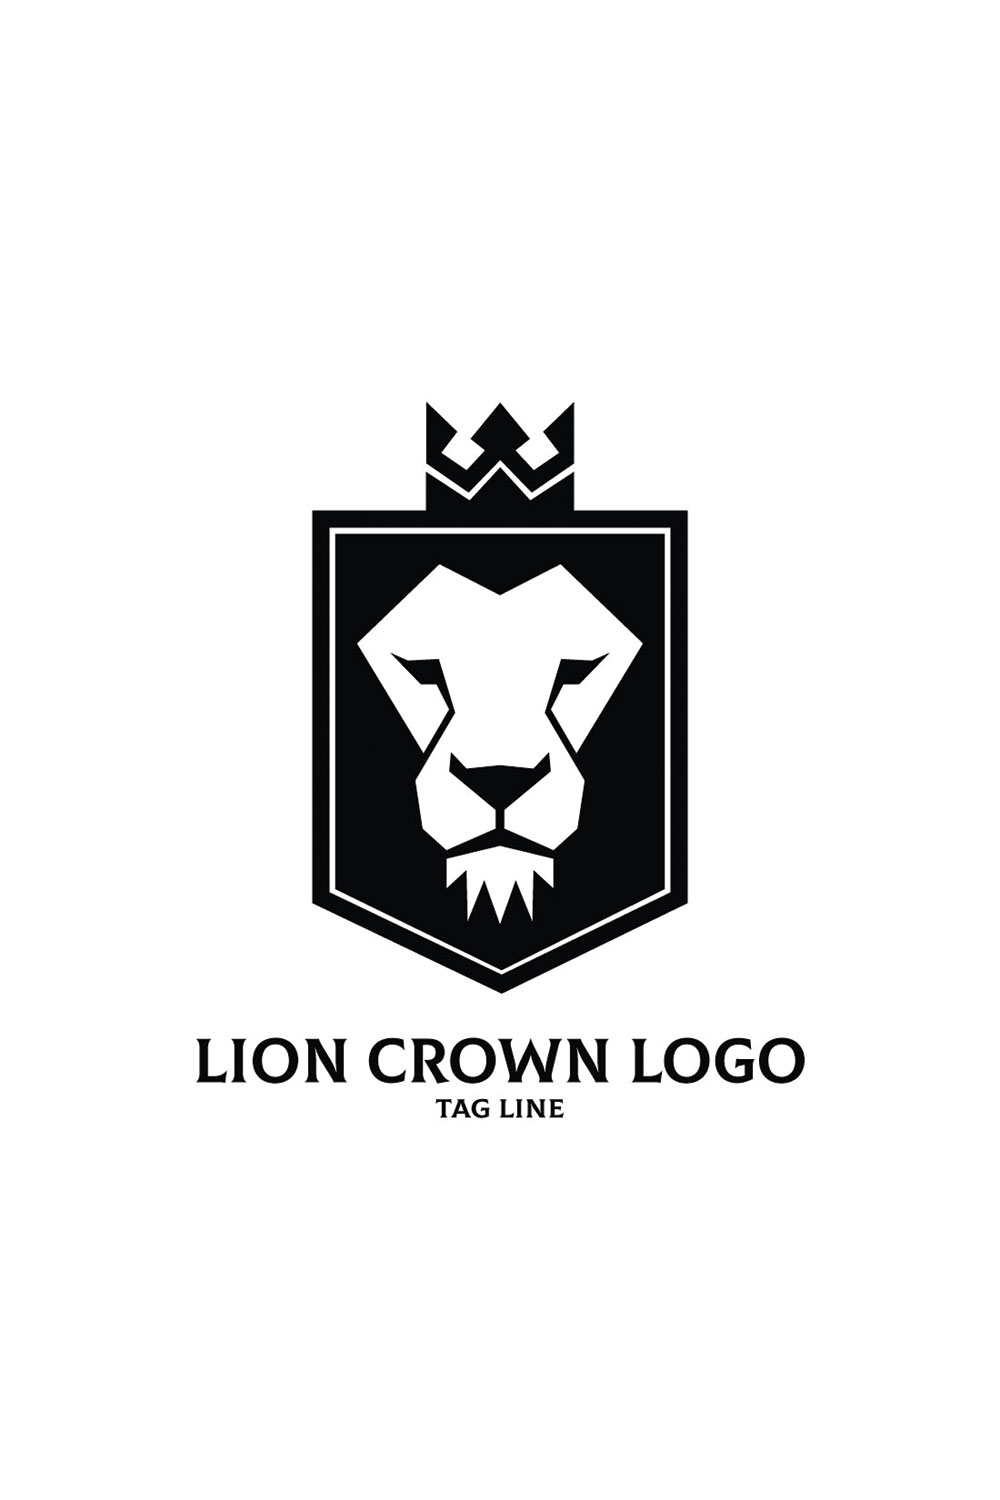 Lion crown logo Template pinterest preview image.